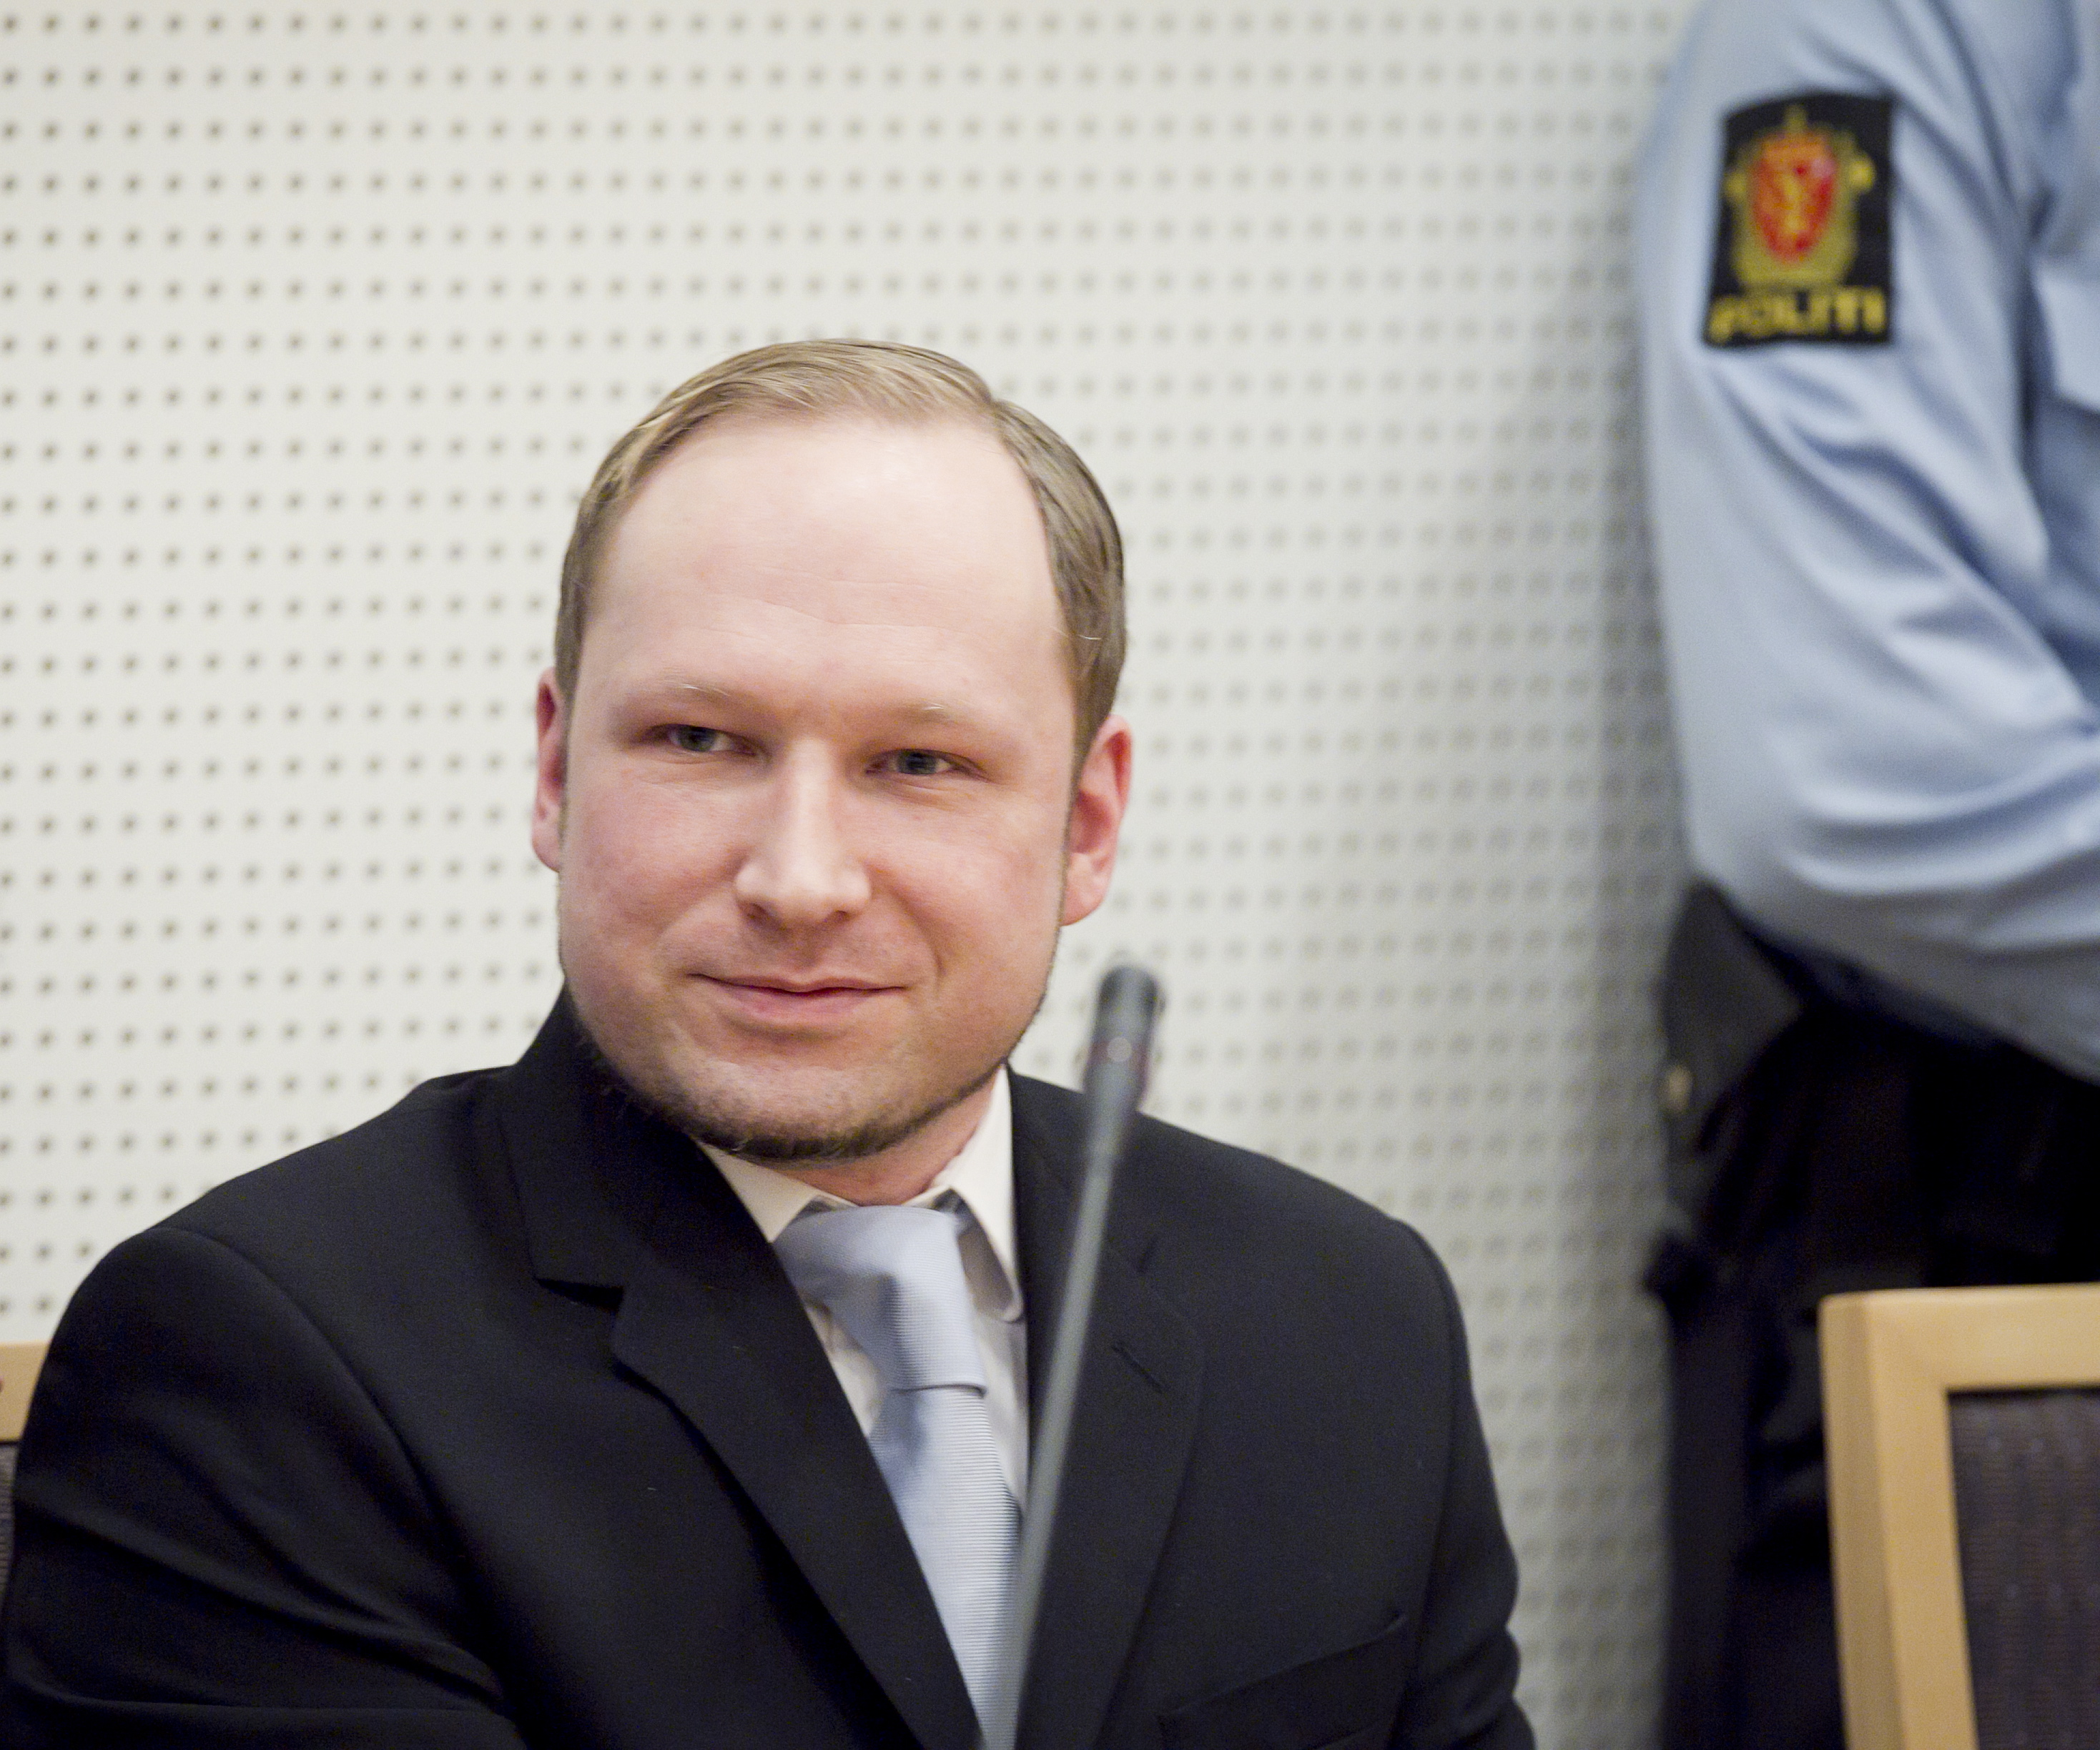 Monrovia, Charles Taylor, Oslo, Liberia, Terrordåd, Anders Behring Breivik